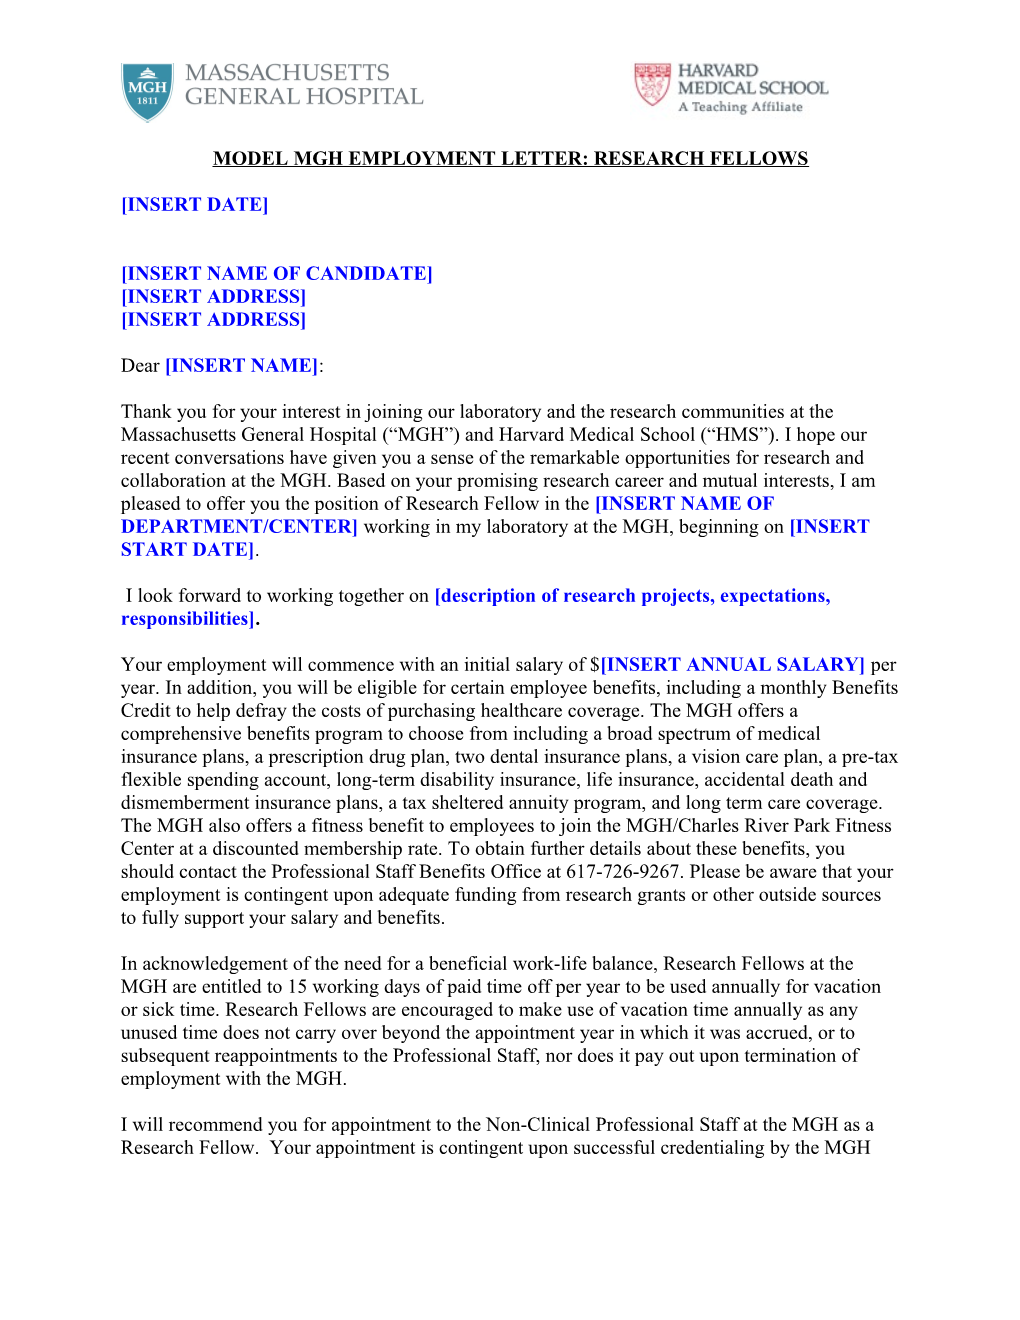 Model Mgh Employment Letter: Research Fellows